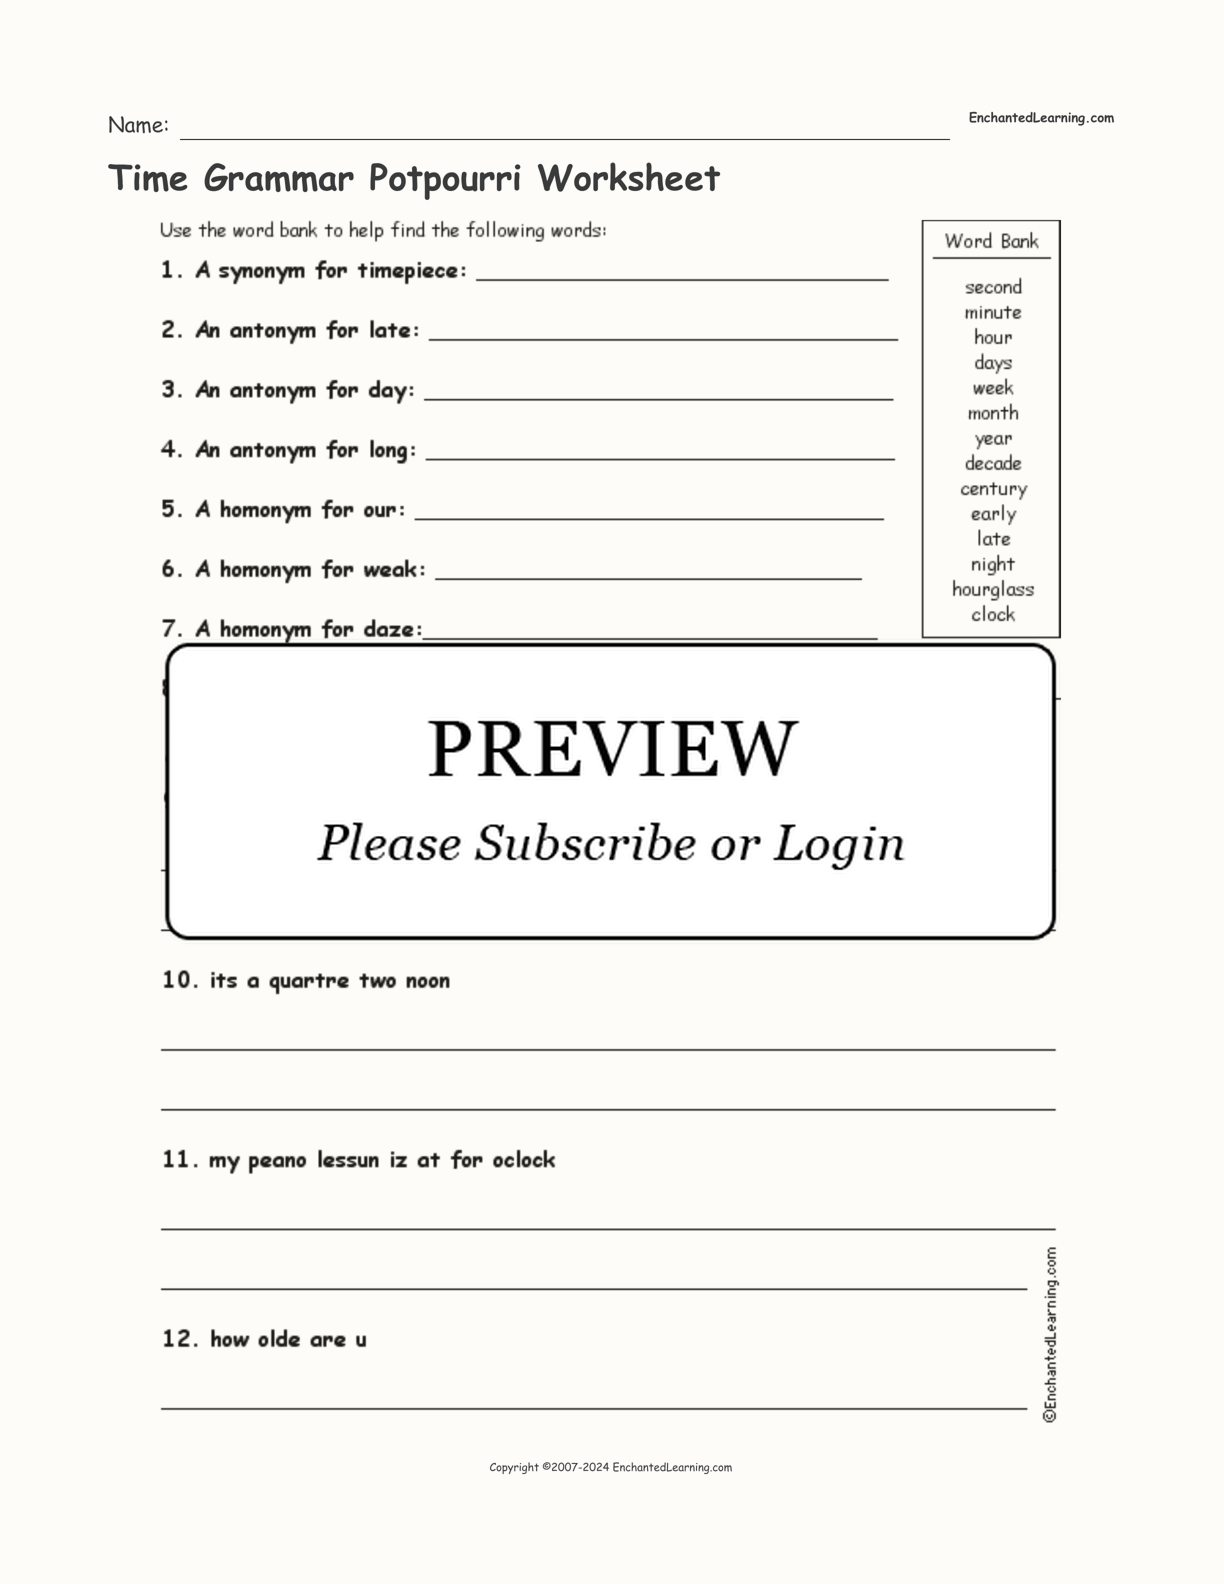 Time Grammar Potpourri Worksheet interactive worksheet page 1